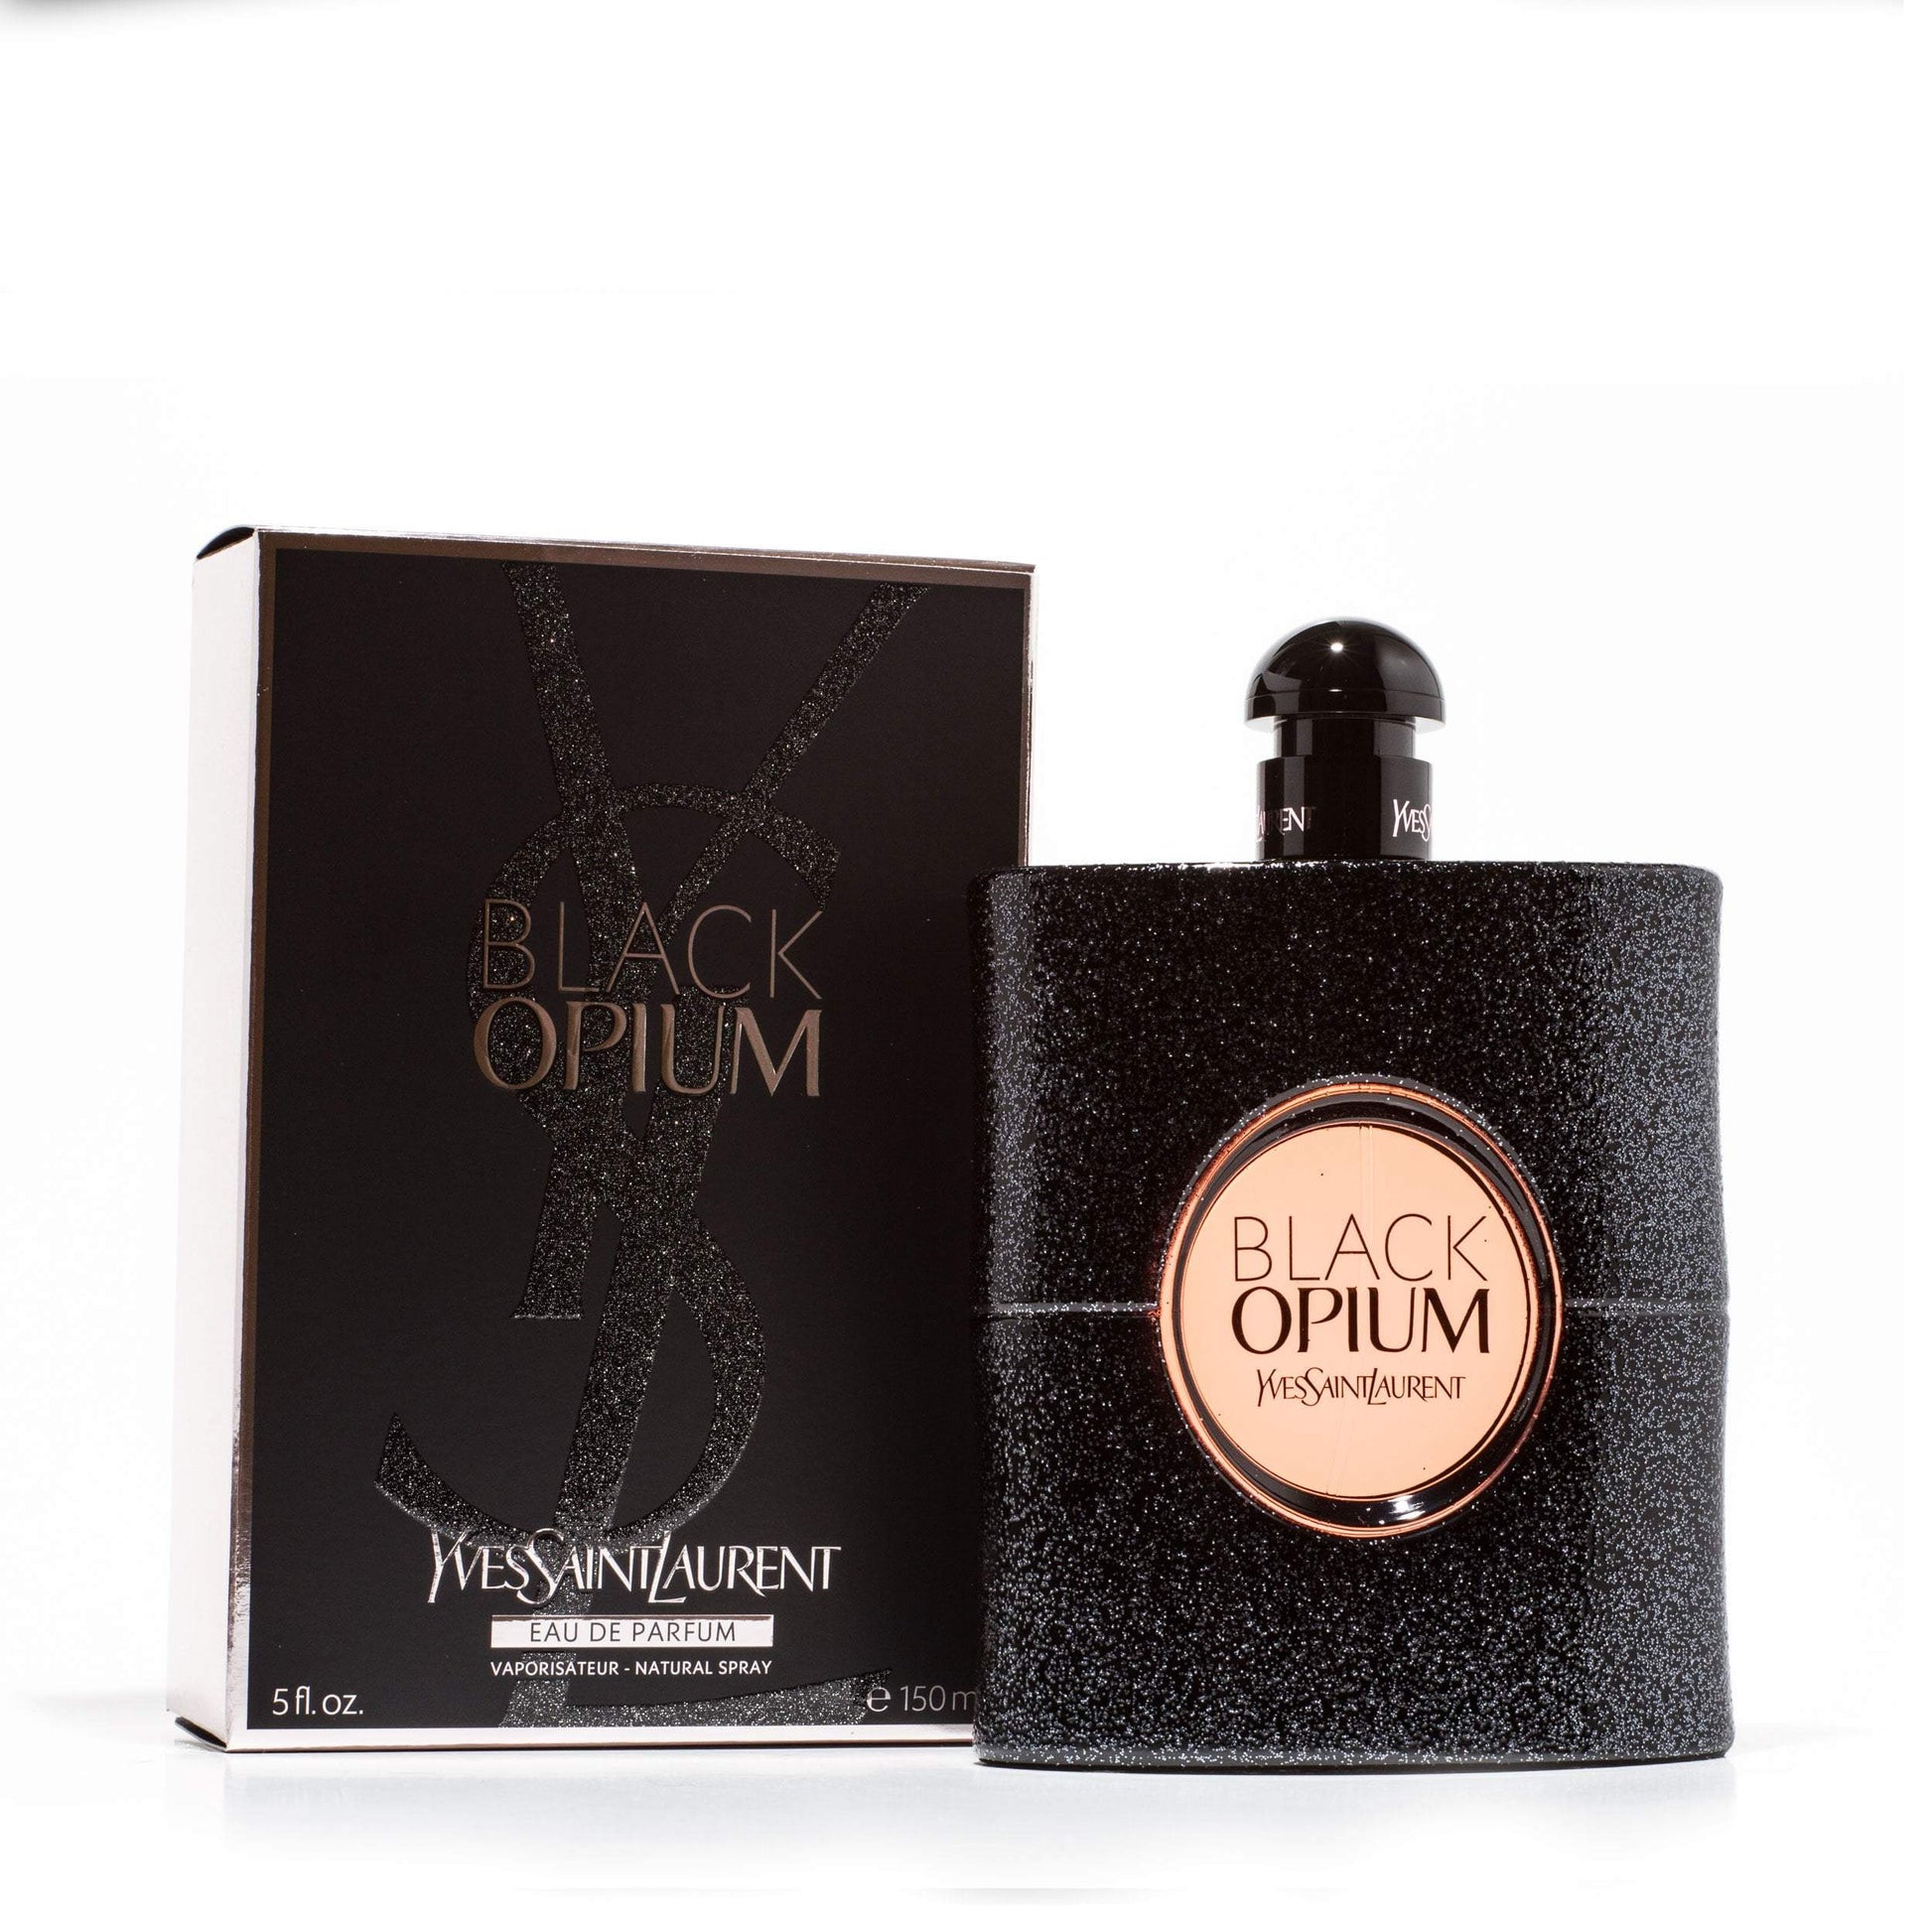 Black Opium, Women's fragrances by Yves Saint Laurent ❤️ Buy online